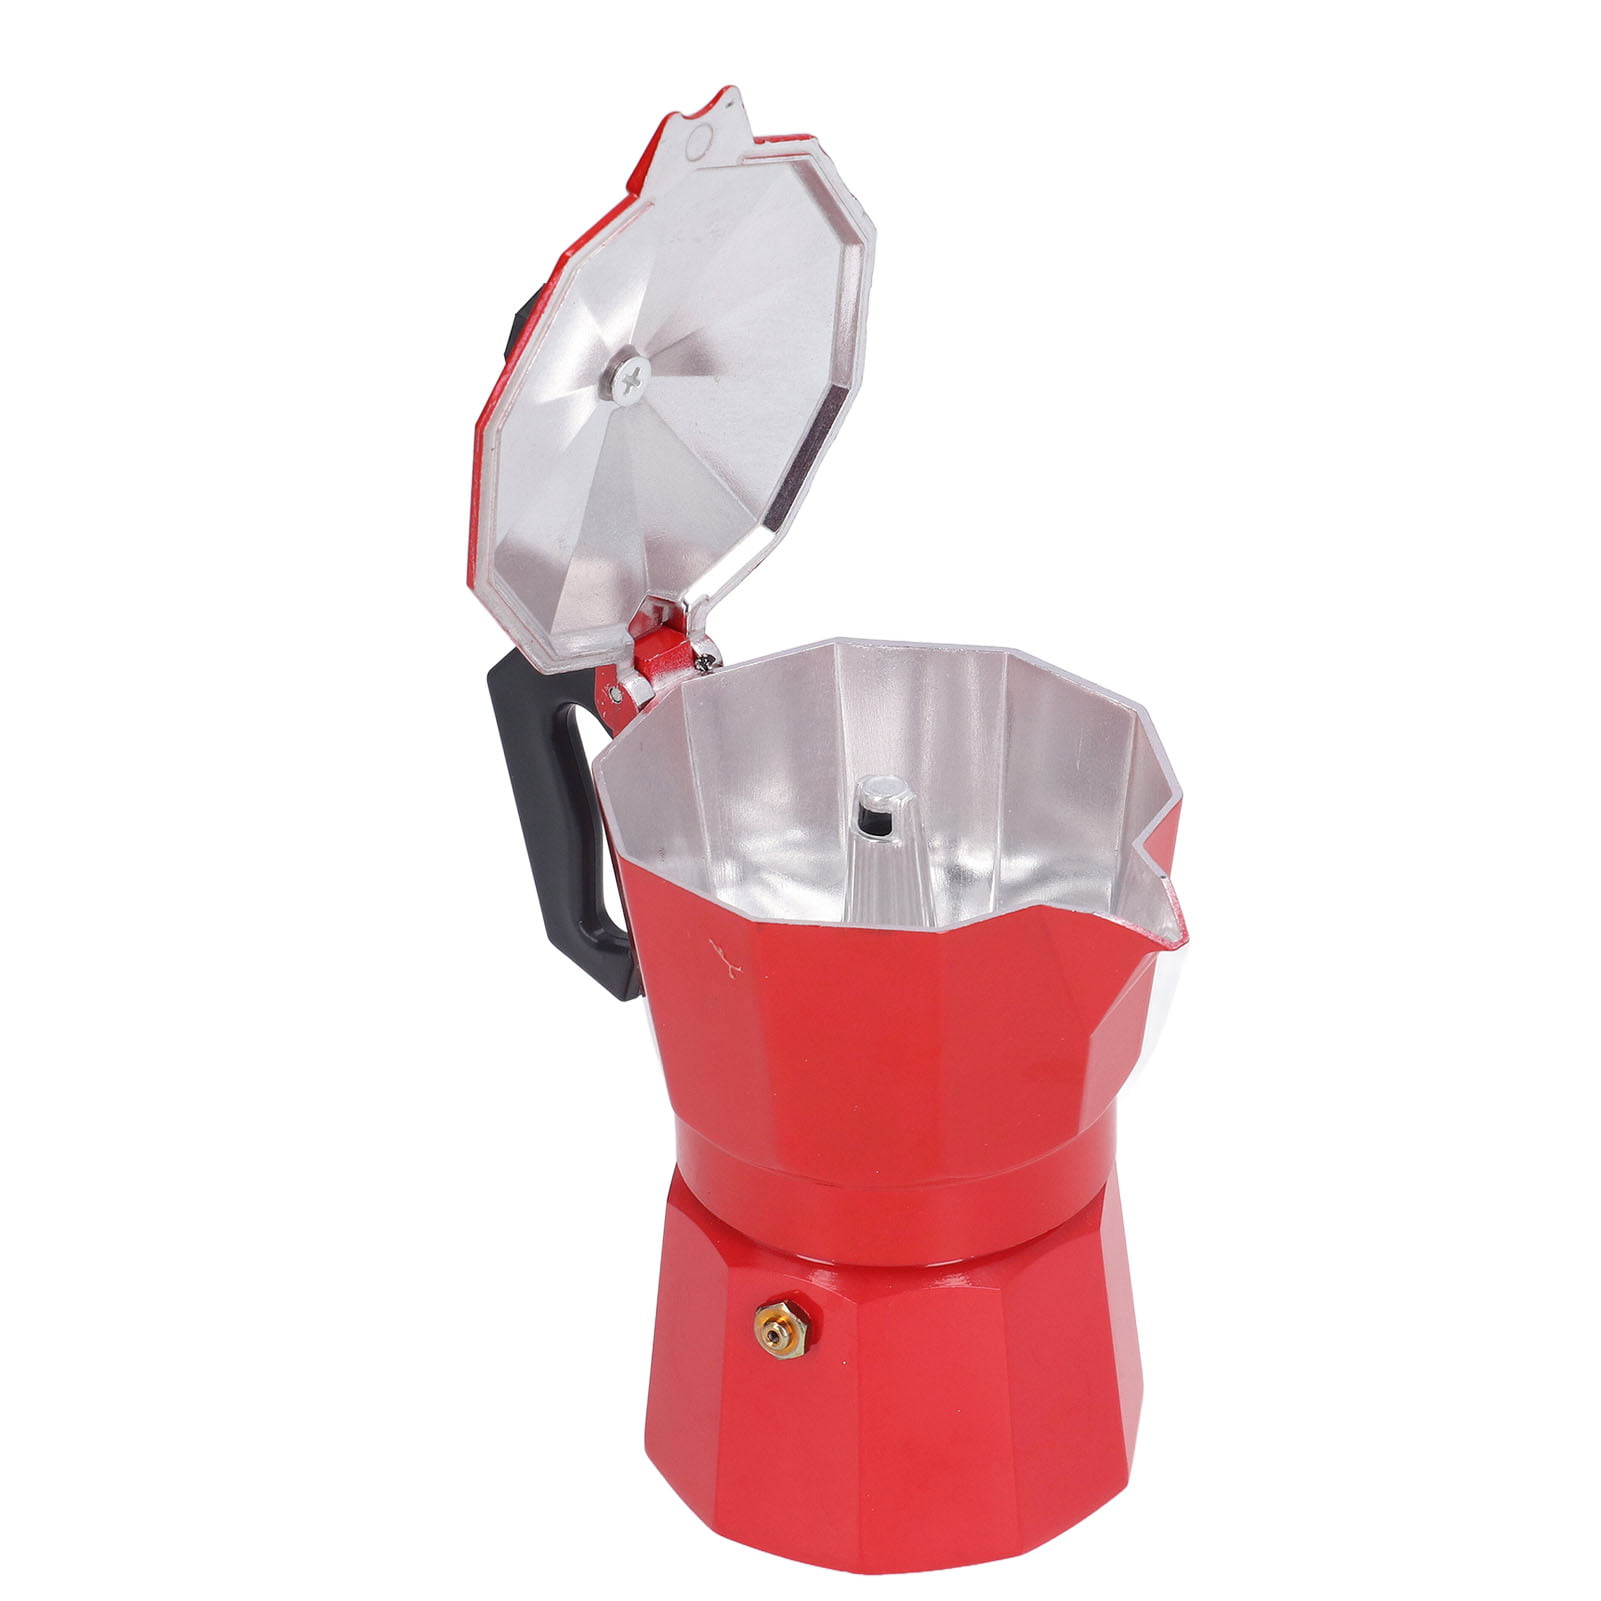 TureClos Coffee Maker Aluminum Coffee Machine Octagon Household Mocha Pot  Kitchen Accessory, Red, 300ML